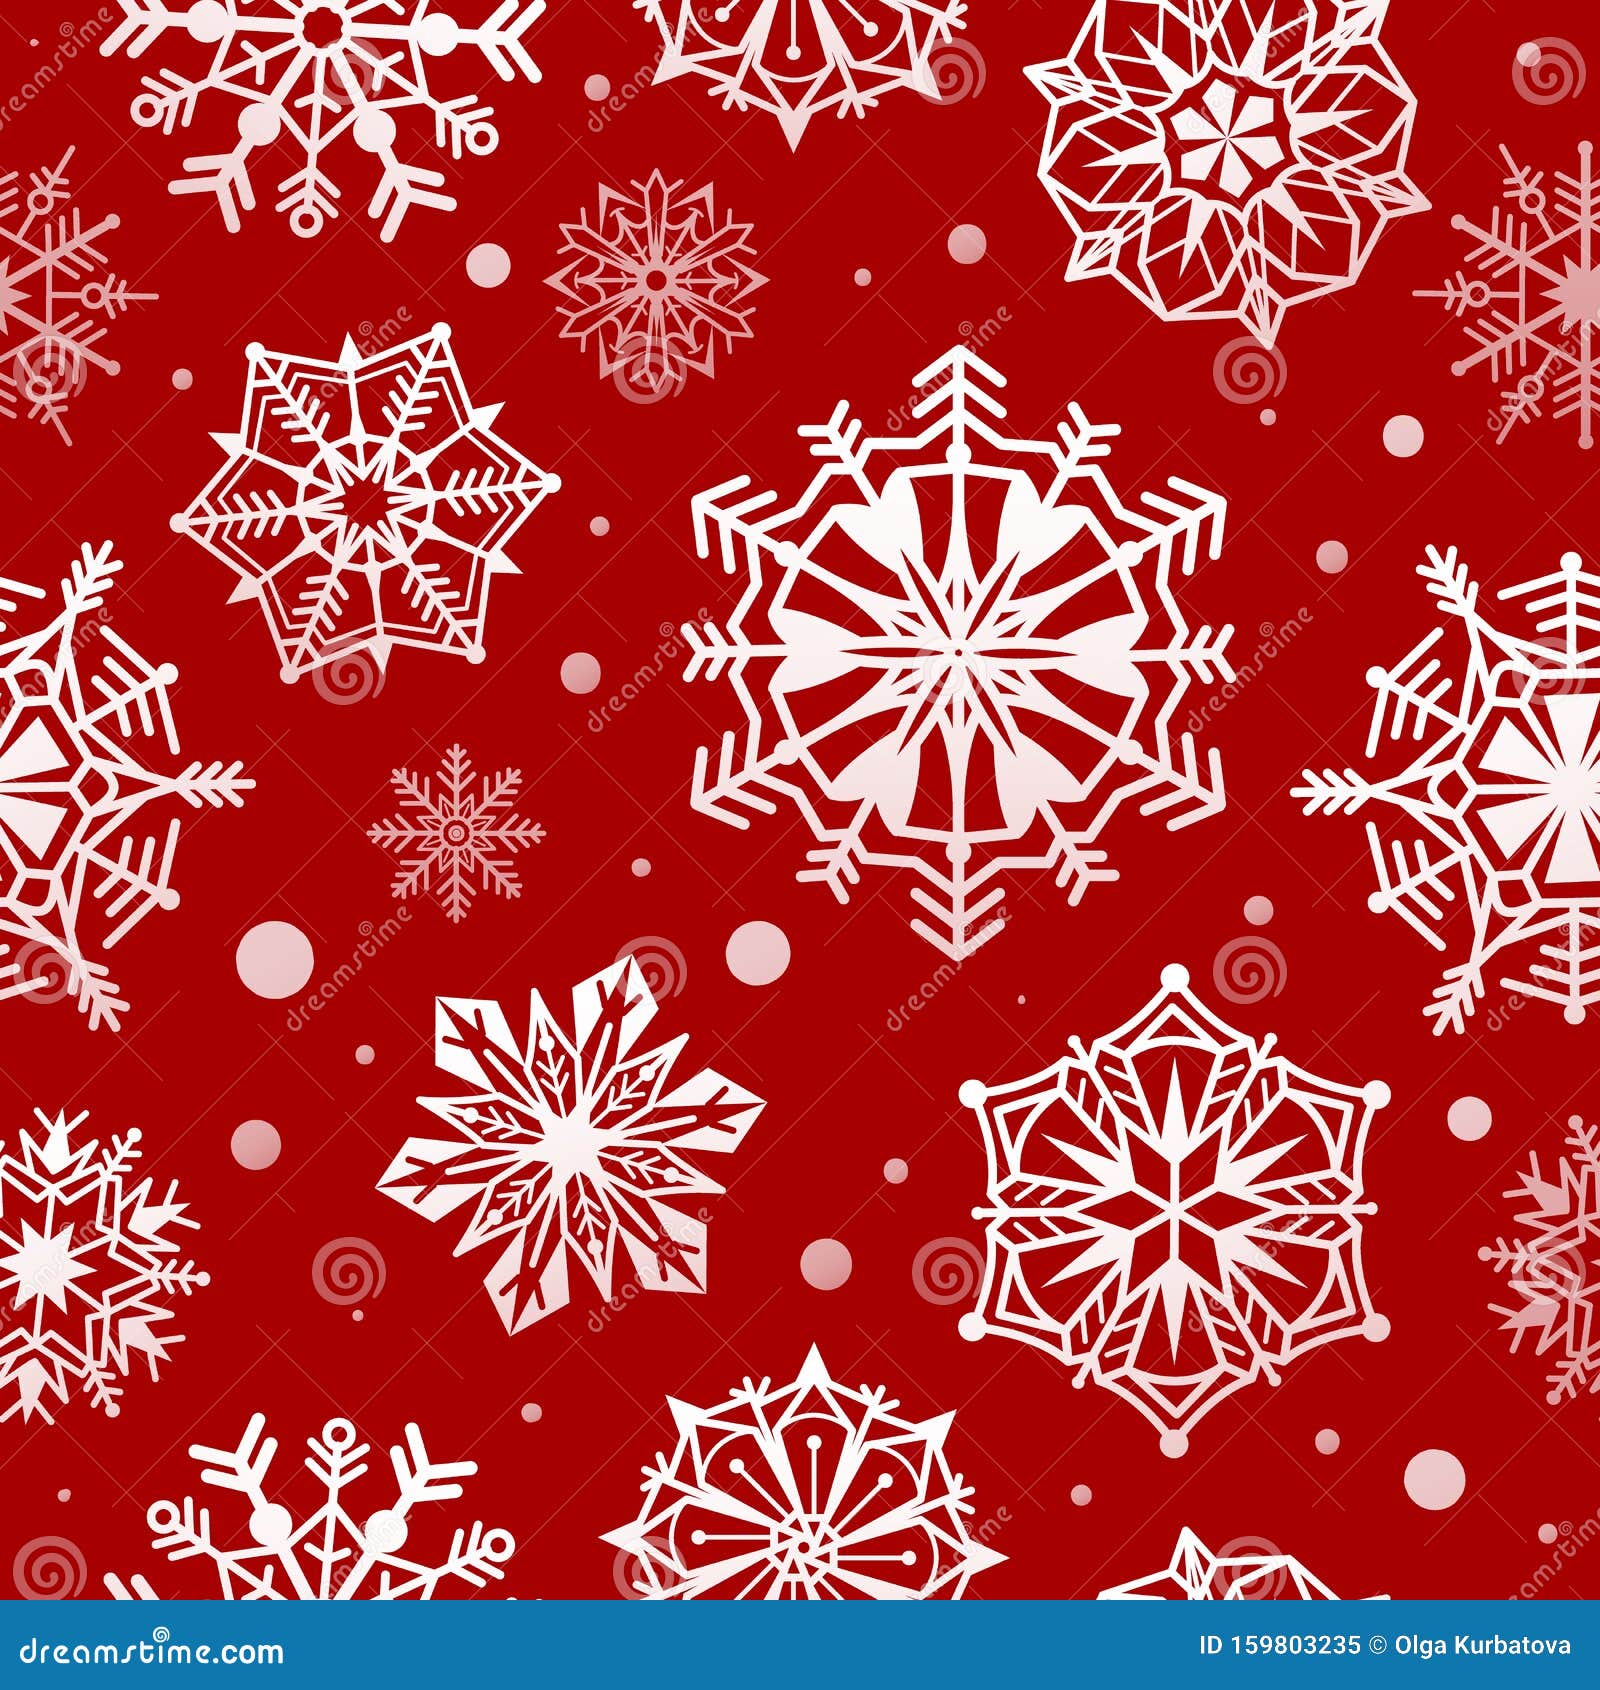 Snowflakes Seamless Pattern. Abstract Christmas Snow Wallpaper, Xmas ...